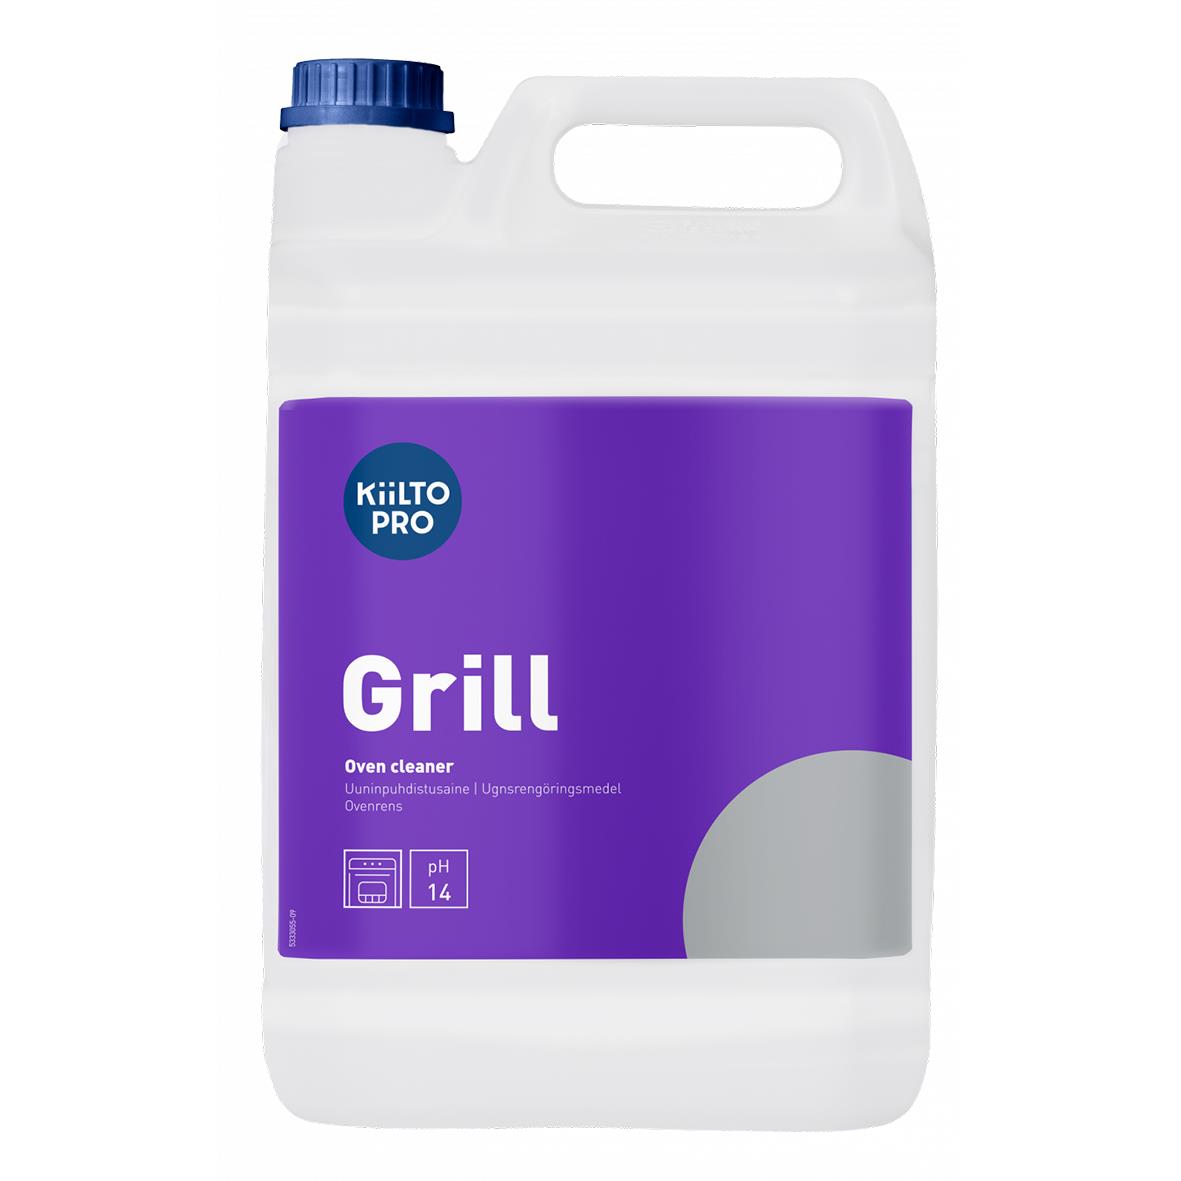 Ugns-/Grillrent Kiilto Pro Grill 5L 52080009